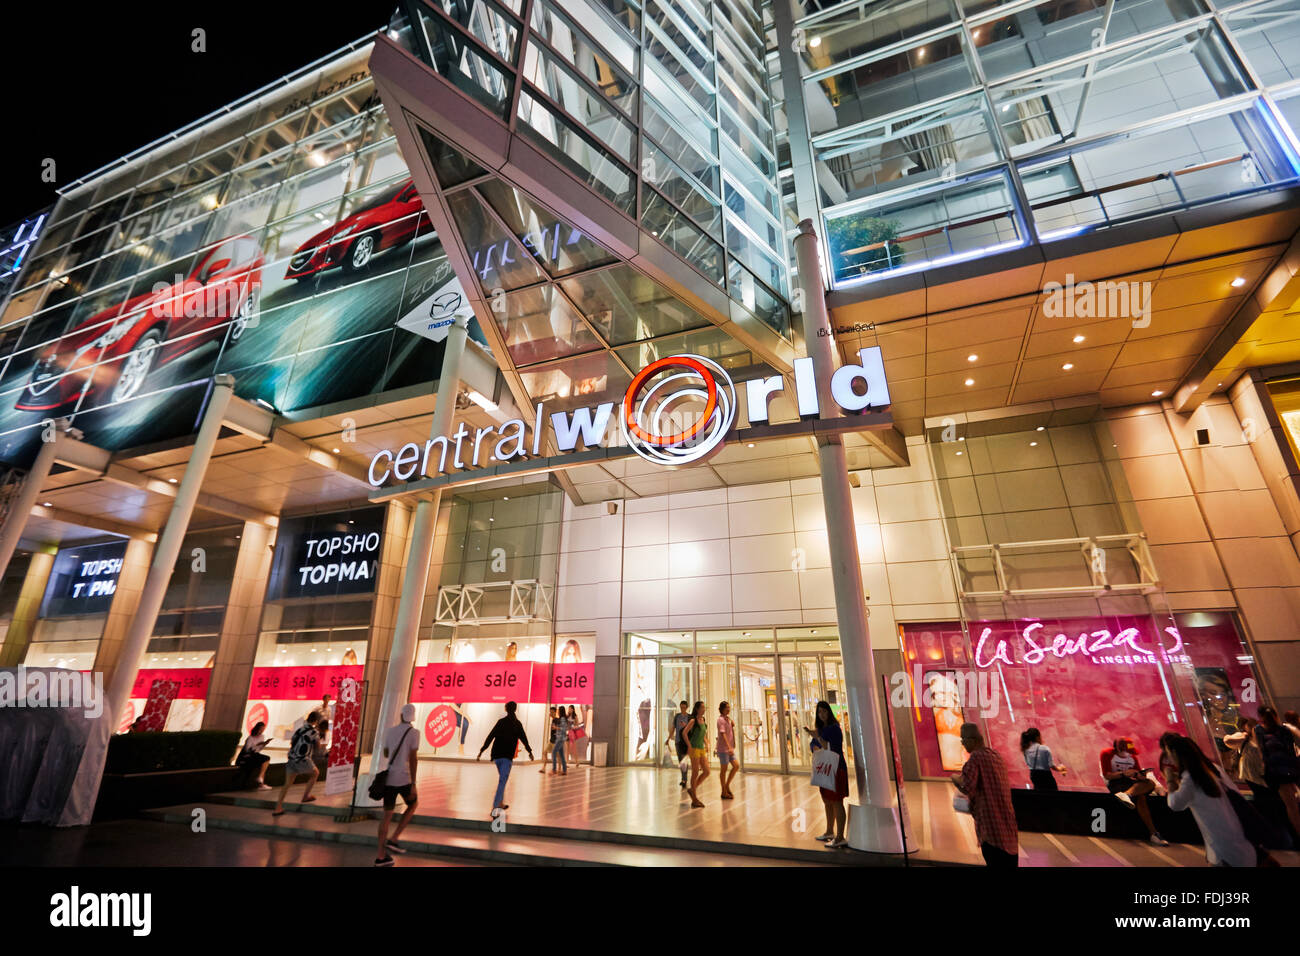 CentralWorld Shopping Plaza illuminated at night. Bangkok, Thailand. Stock Photo